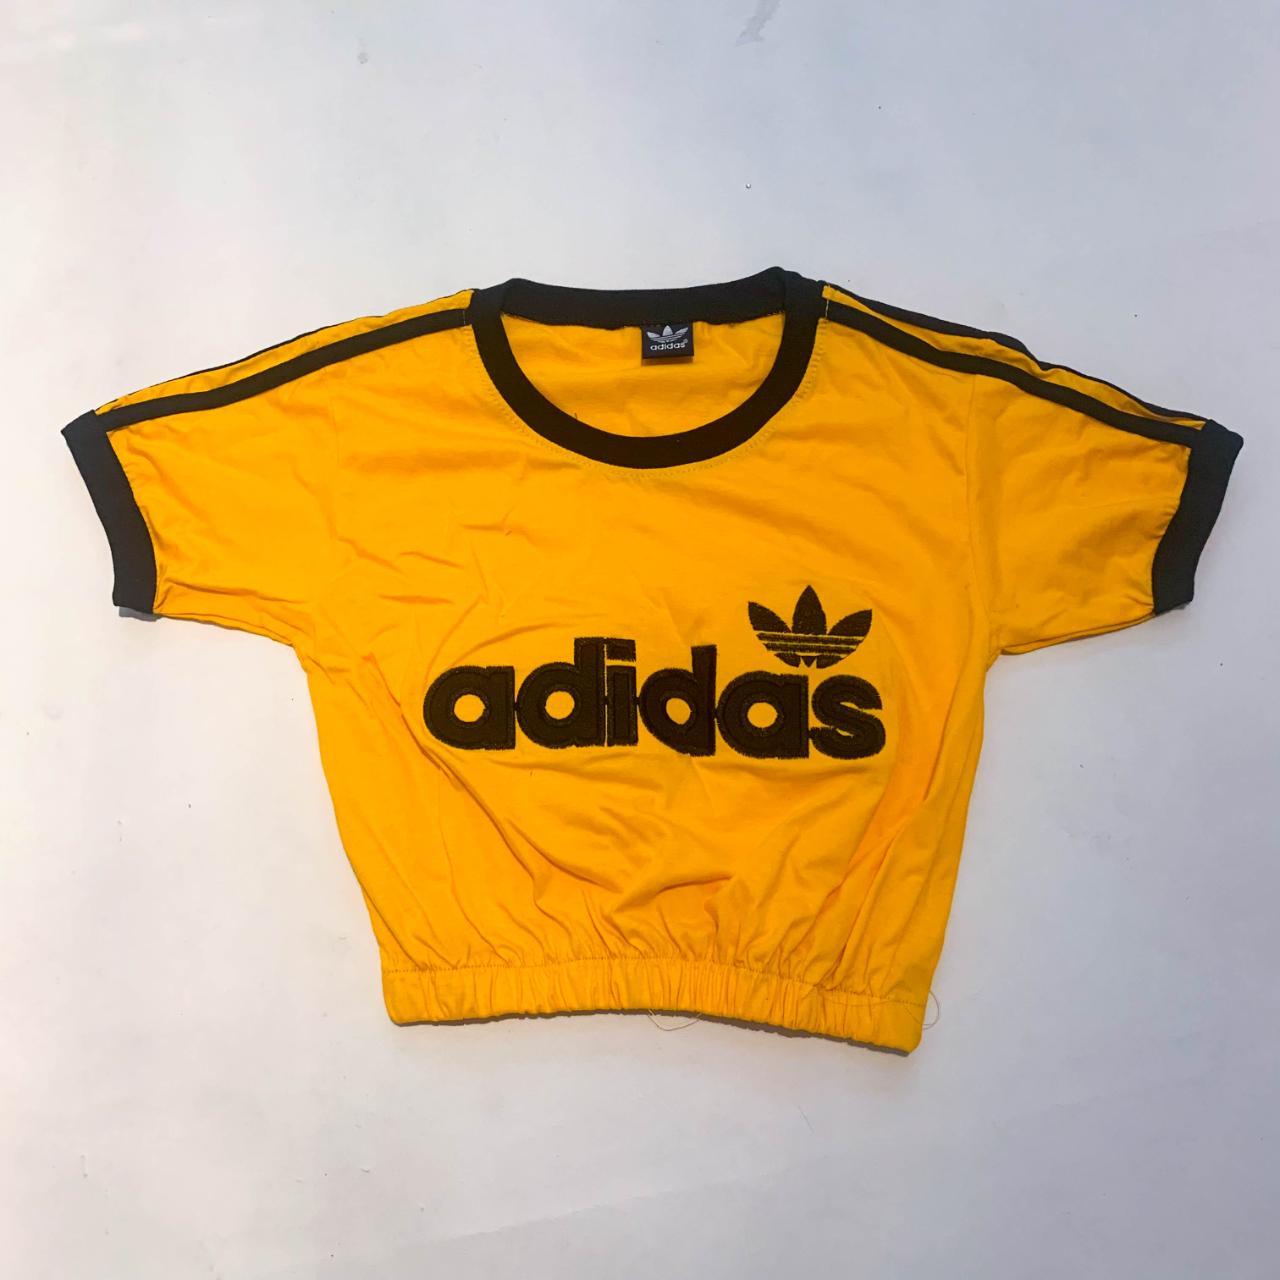 Adidas Women's Black and Yellow T-shirt | Depop